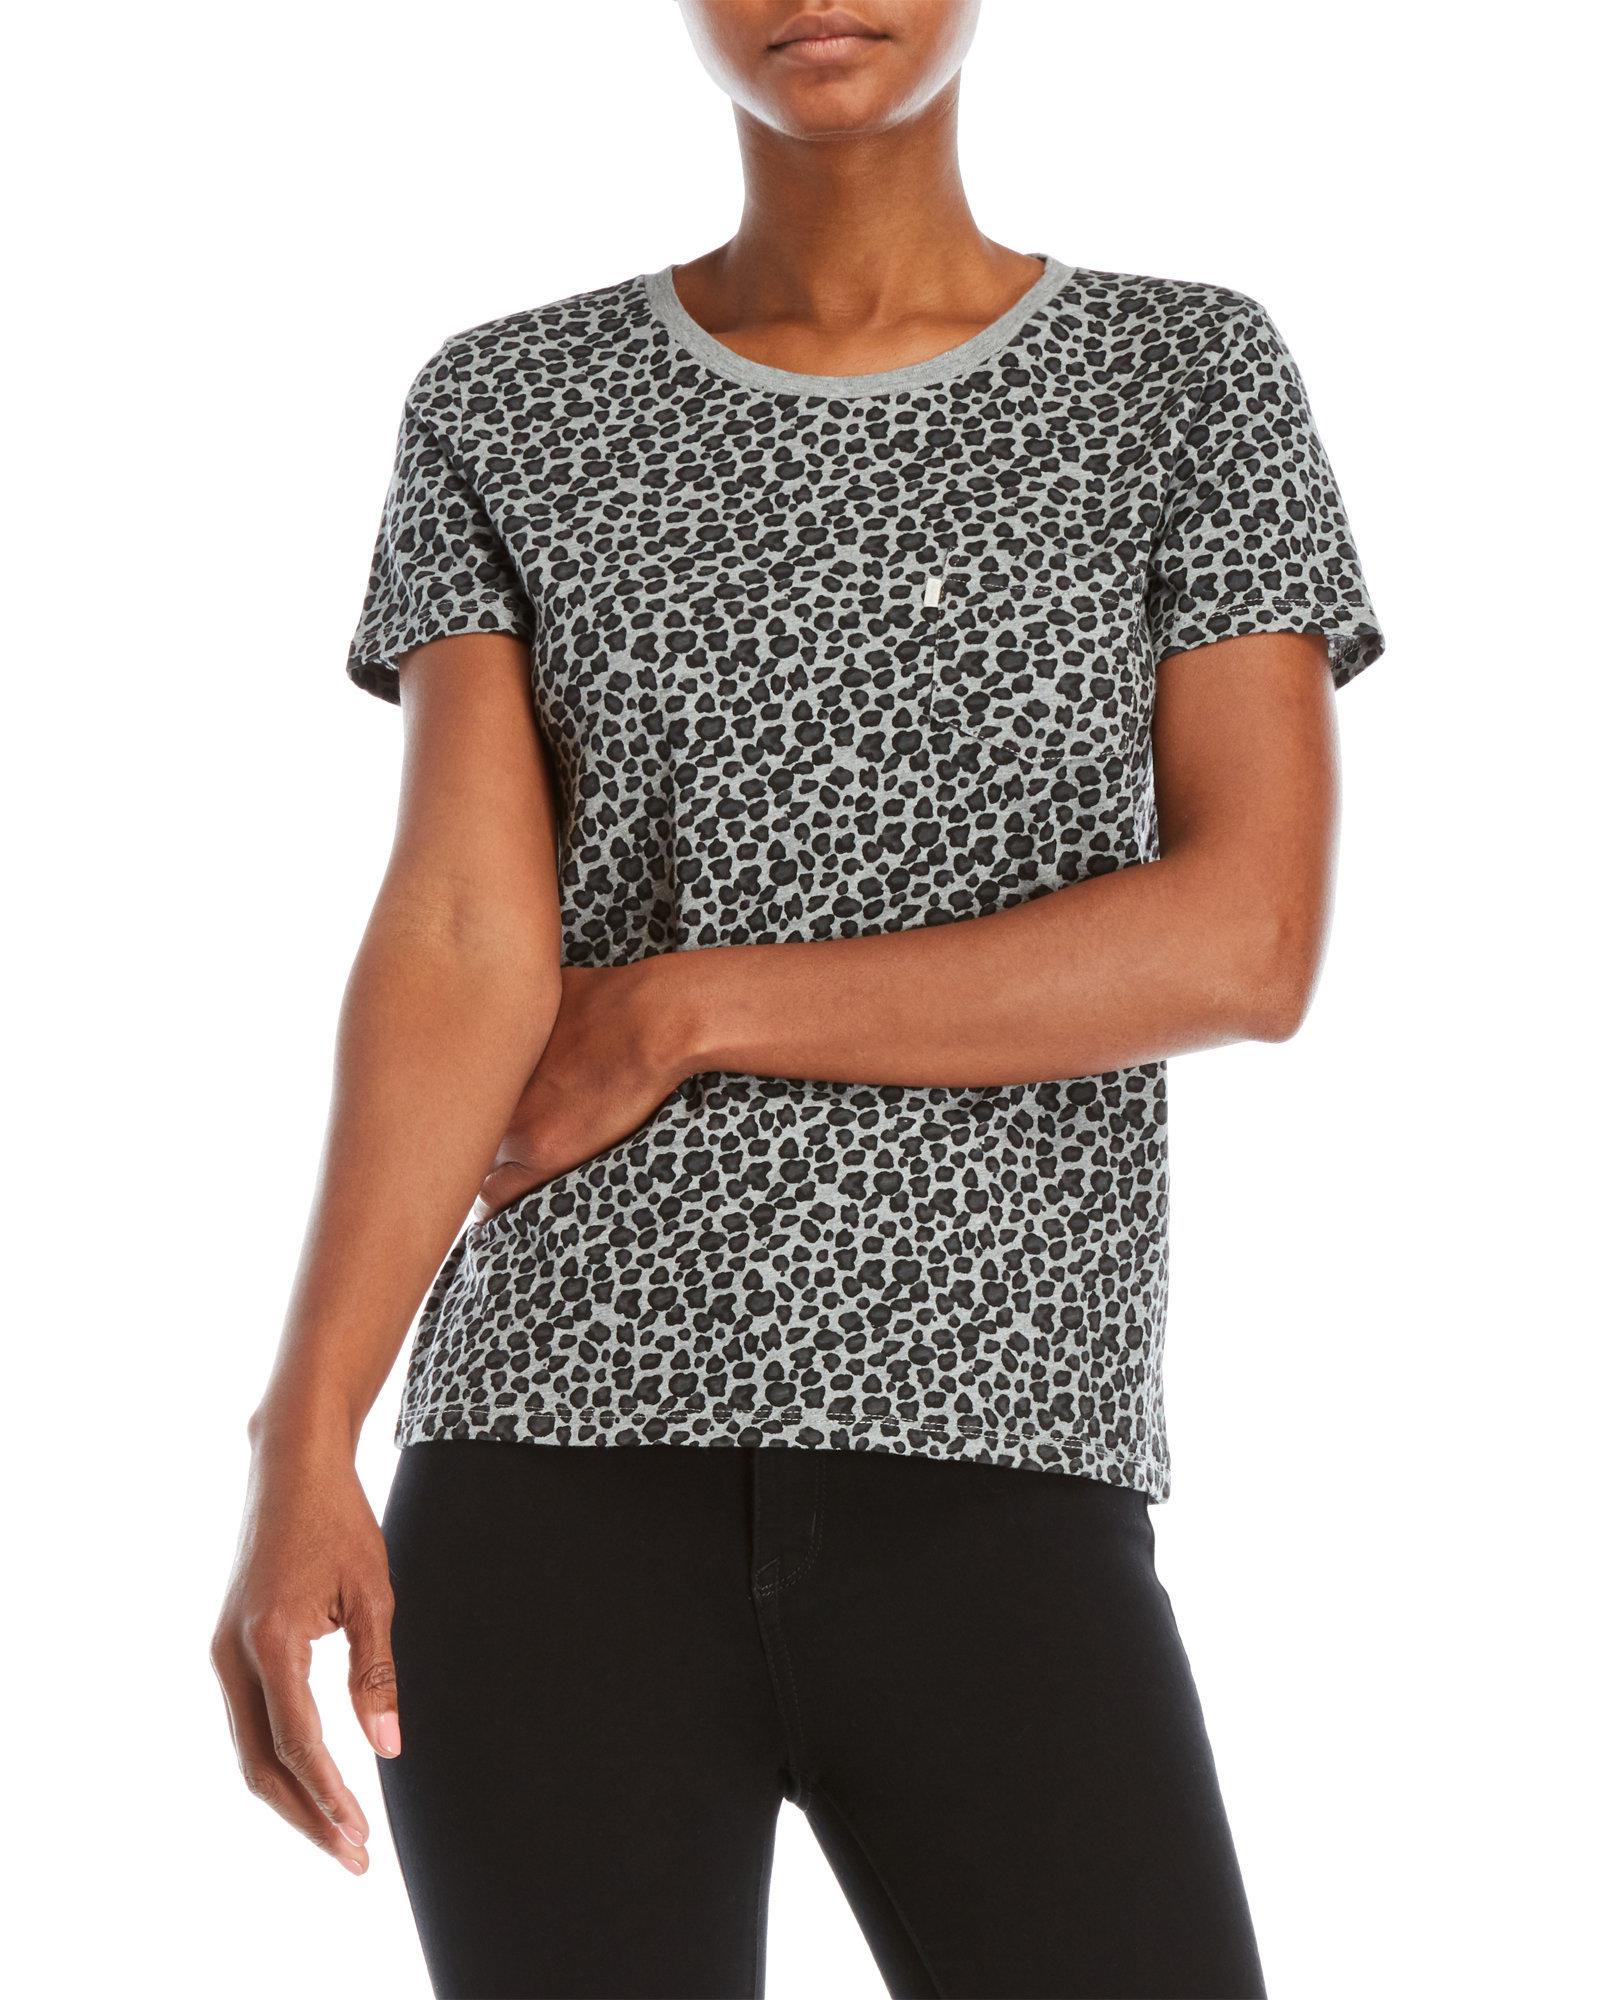 levi's leopard shirt cheap online